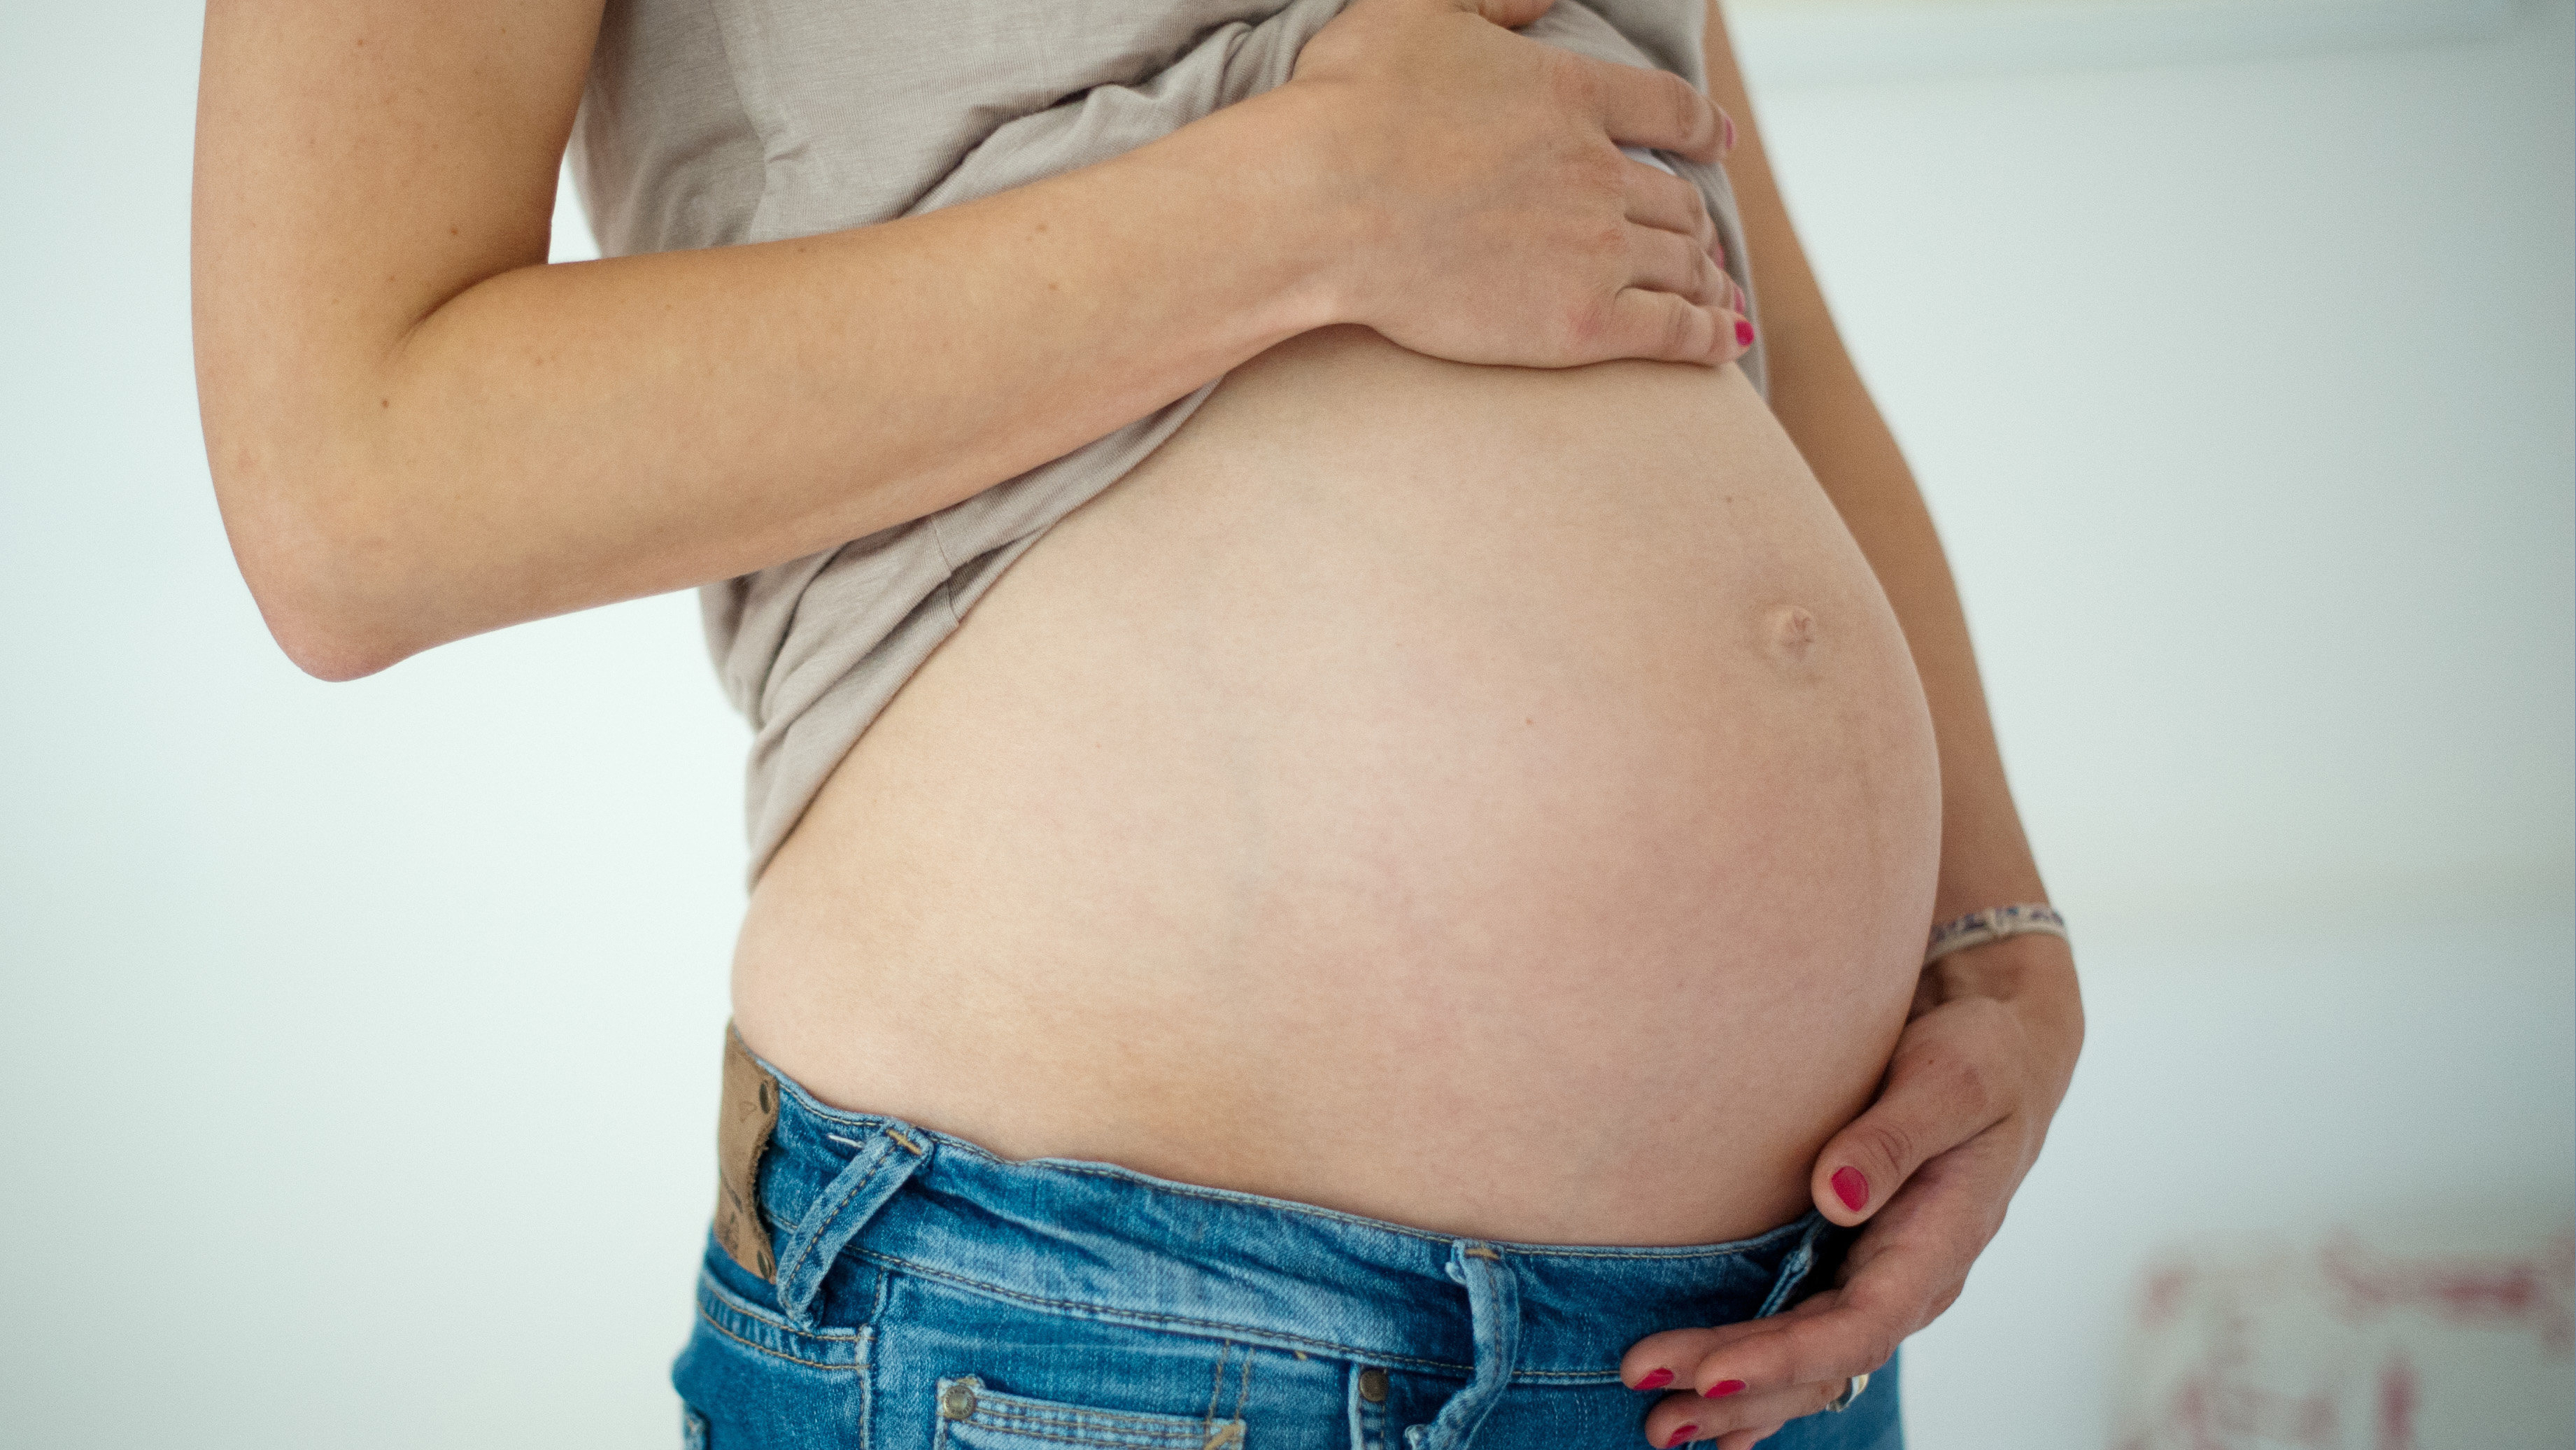 Schwangere hält sich den Bauch | picture alliance / dpa